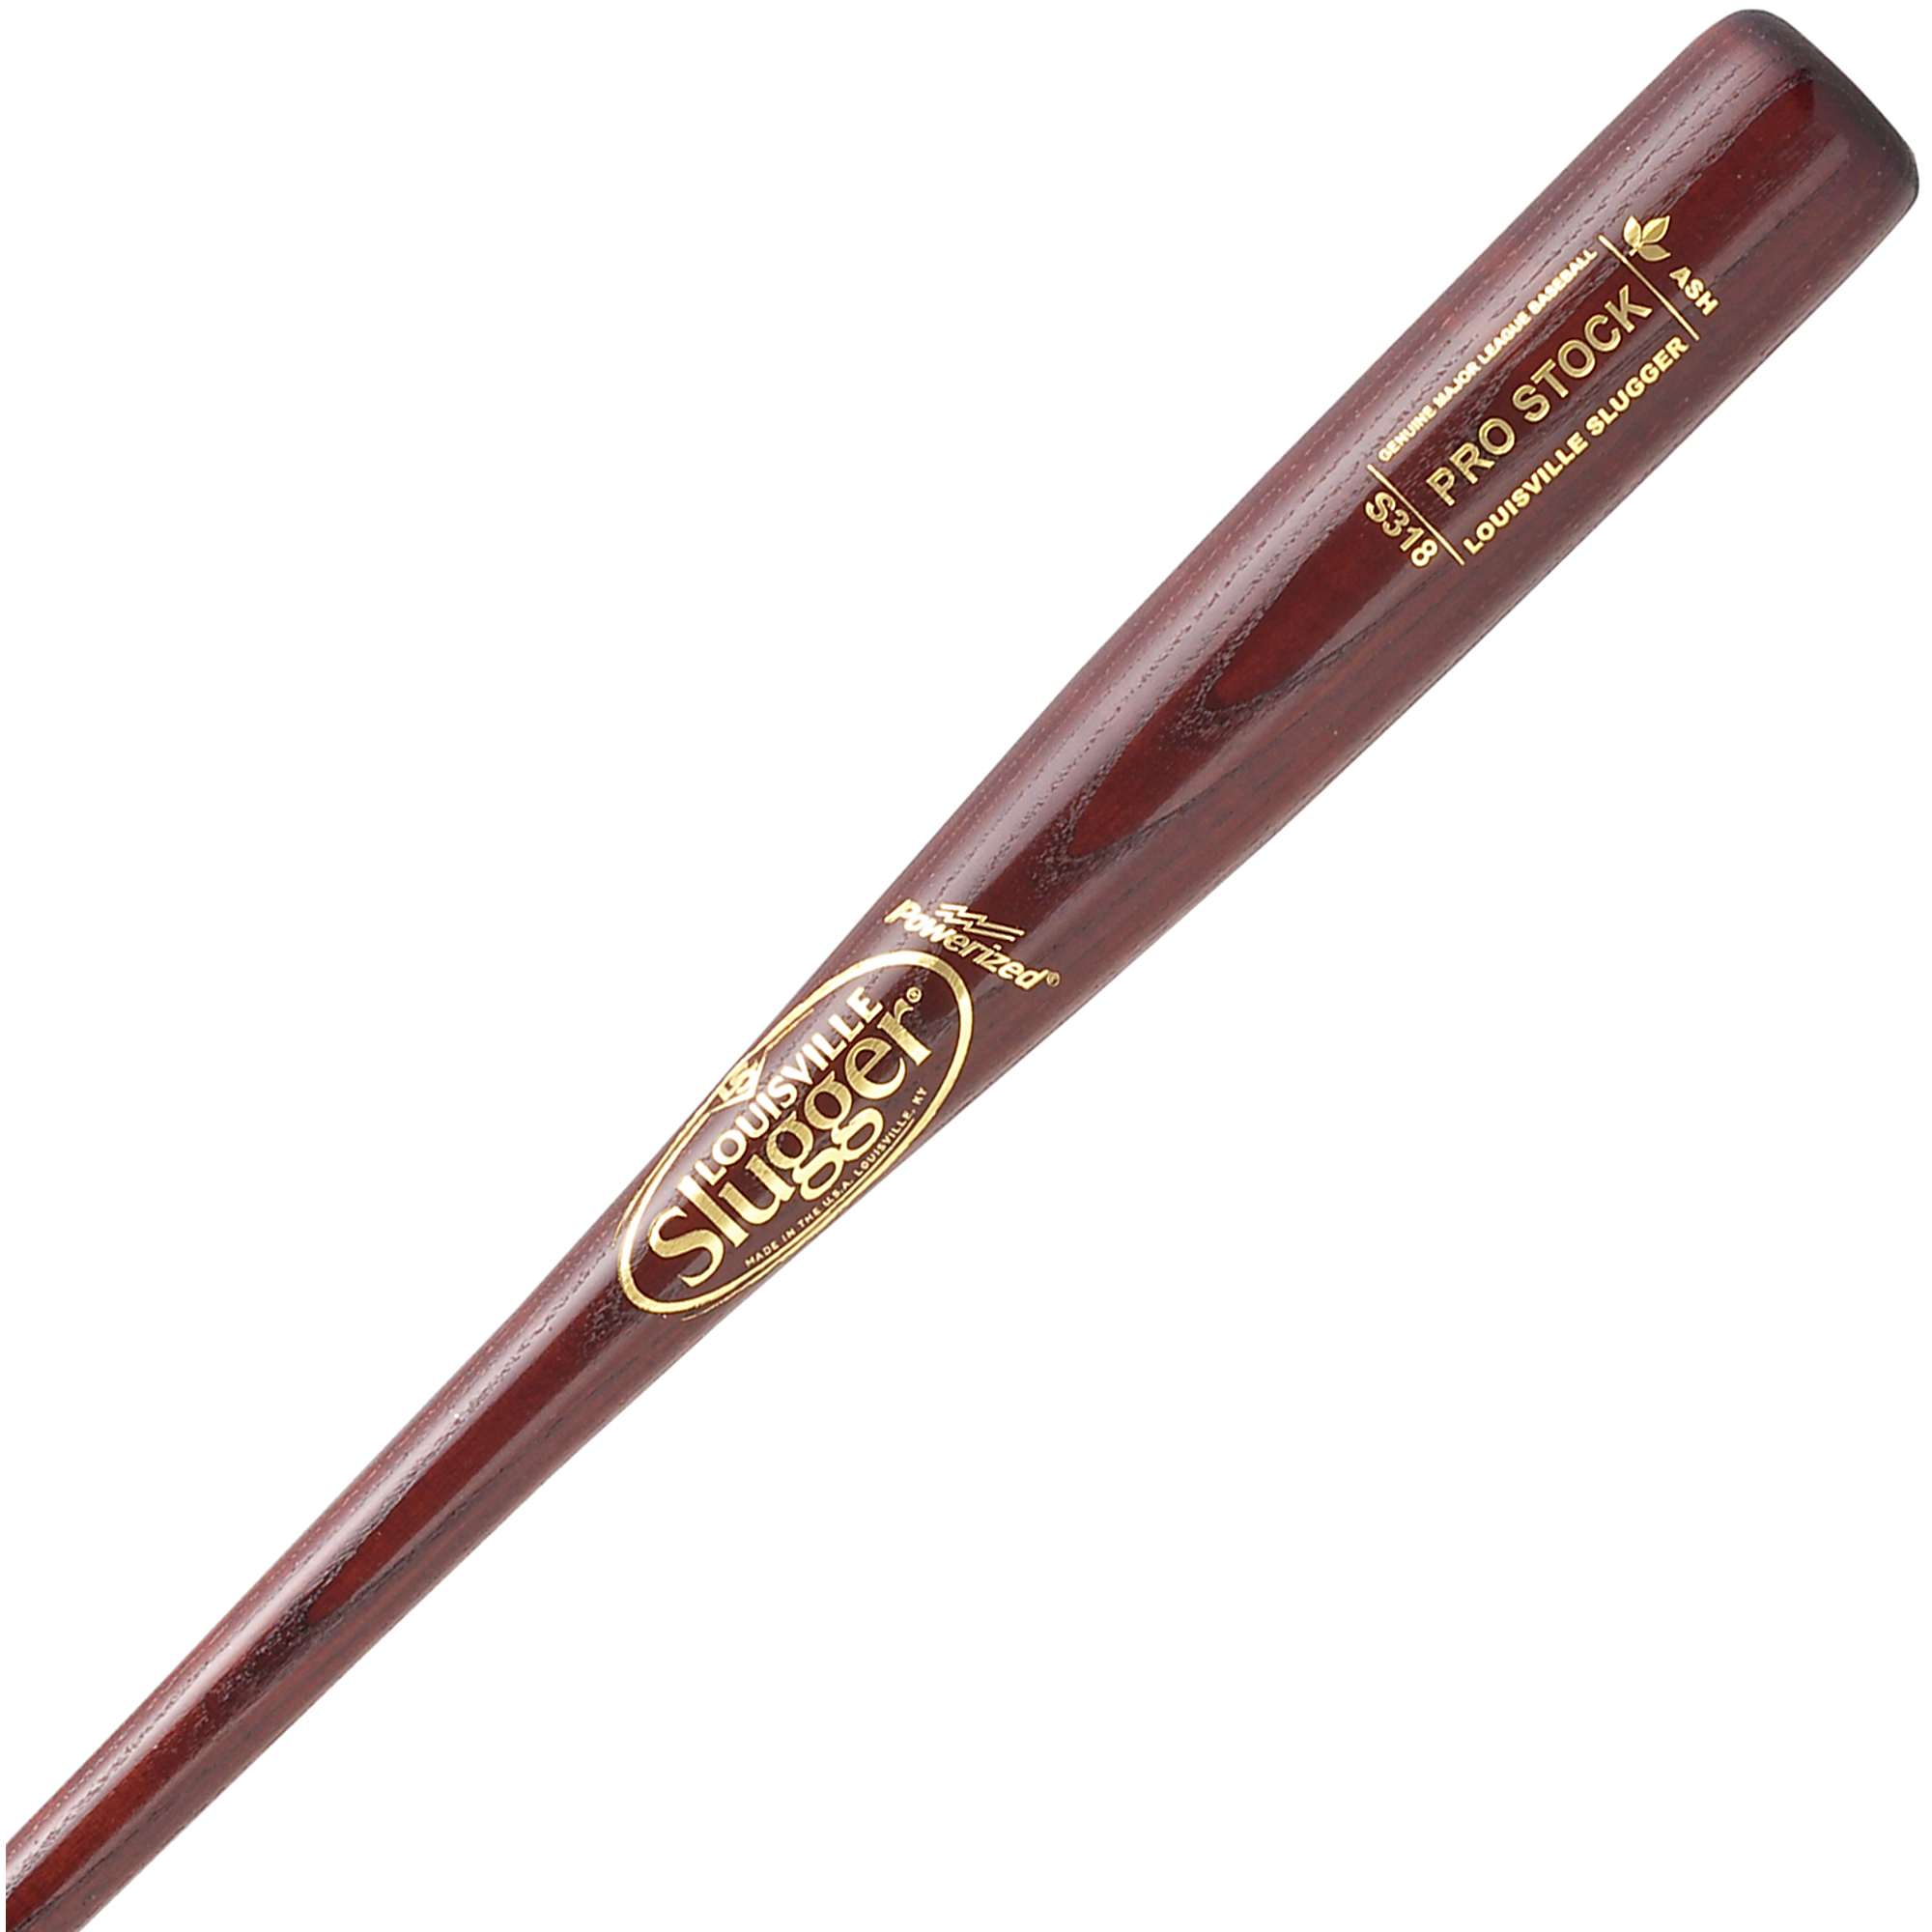 Louisville Slugger Pro Stock Ash Wood Baseball Bats | eBay